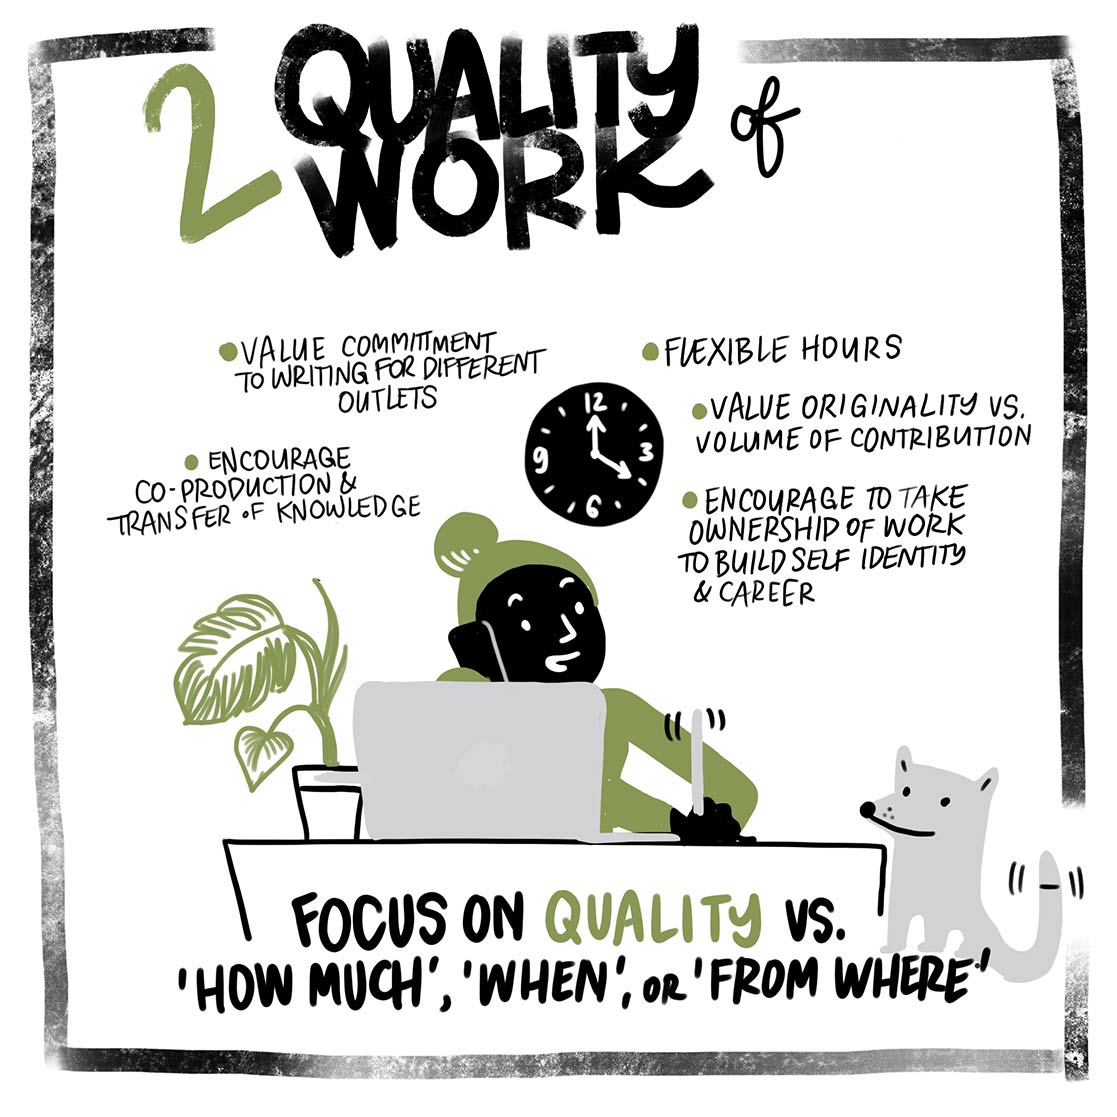 2. Quality vs. Quantity!